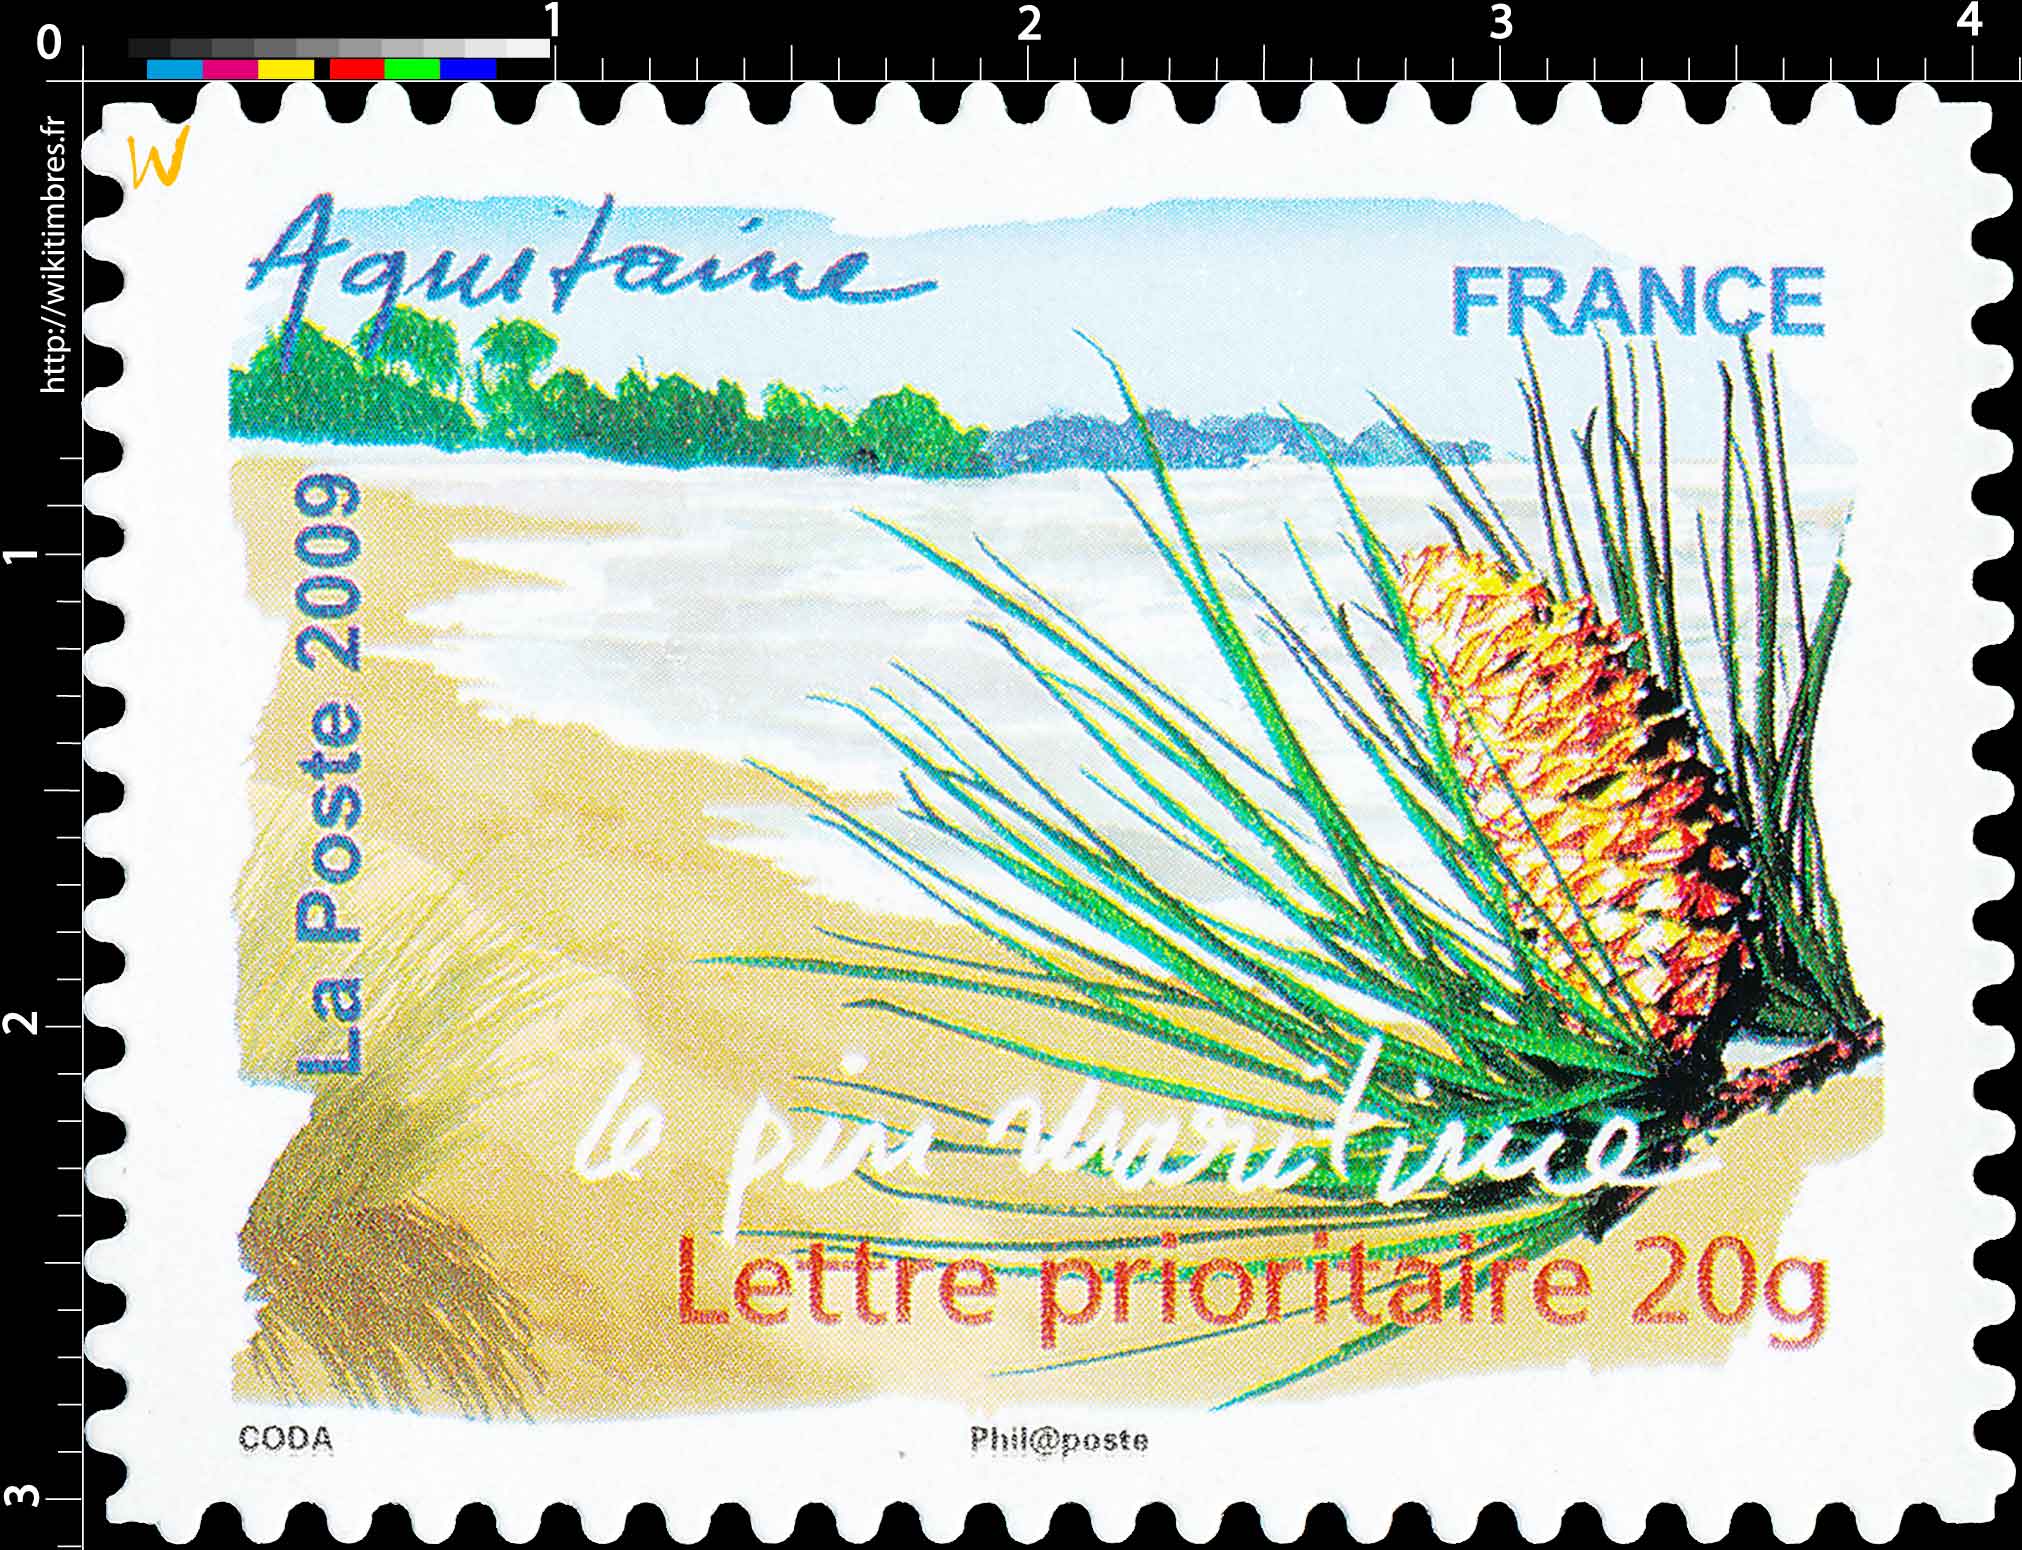 2009 Aquitaine le pin maritime